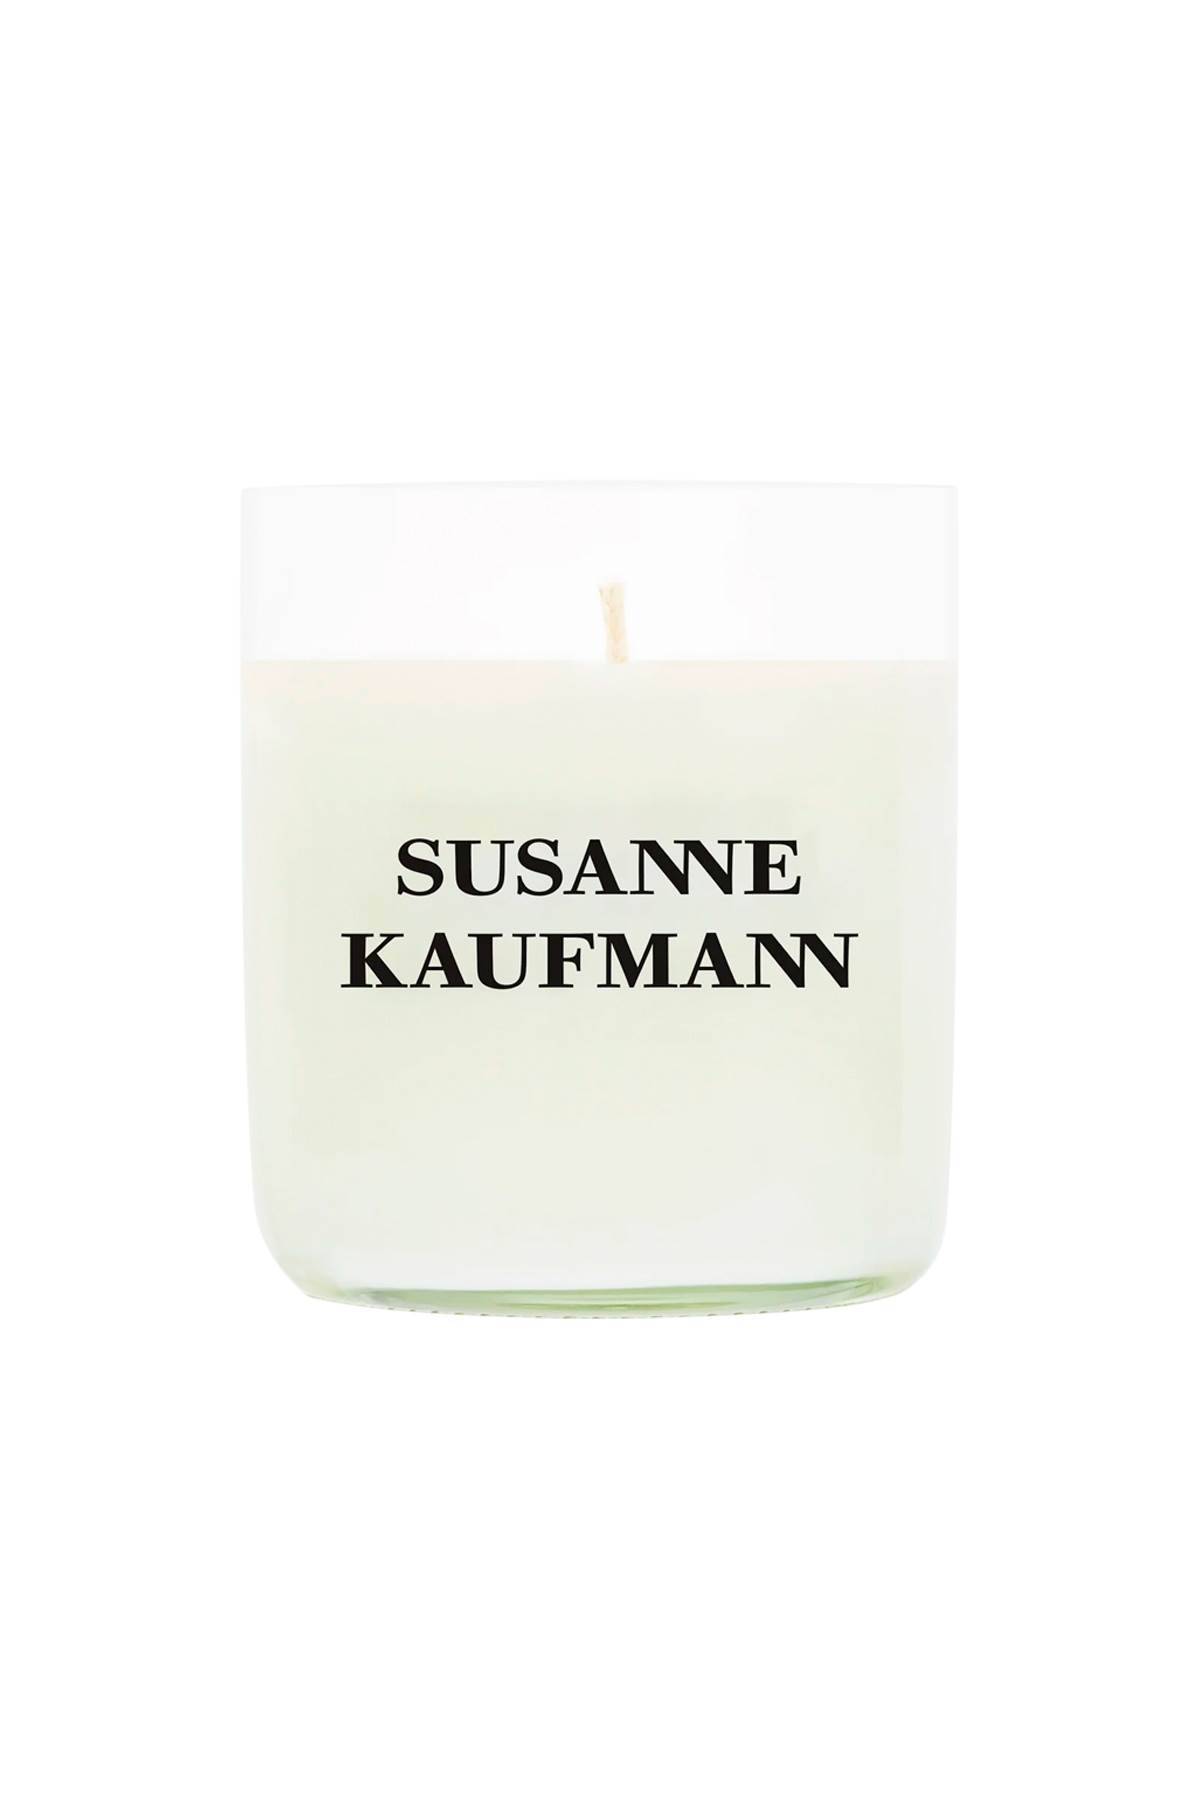 Susanne Kaufmann SUSANNE KAUFMANN balancing candle - 305ml